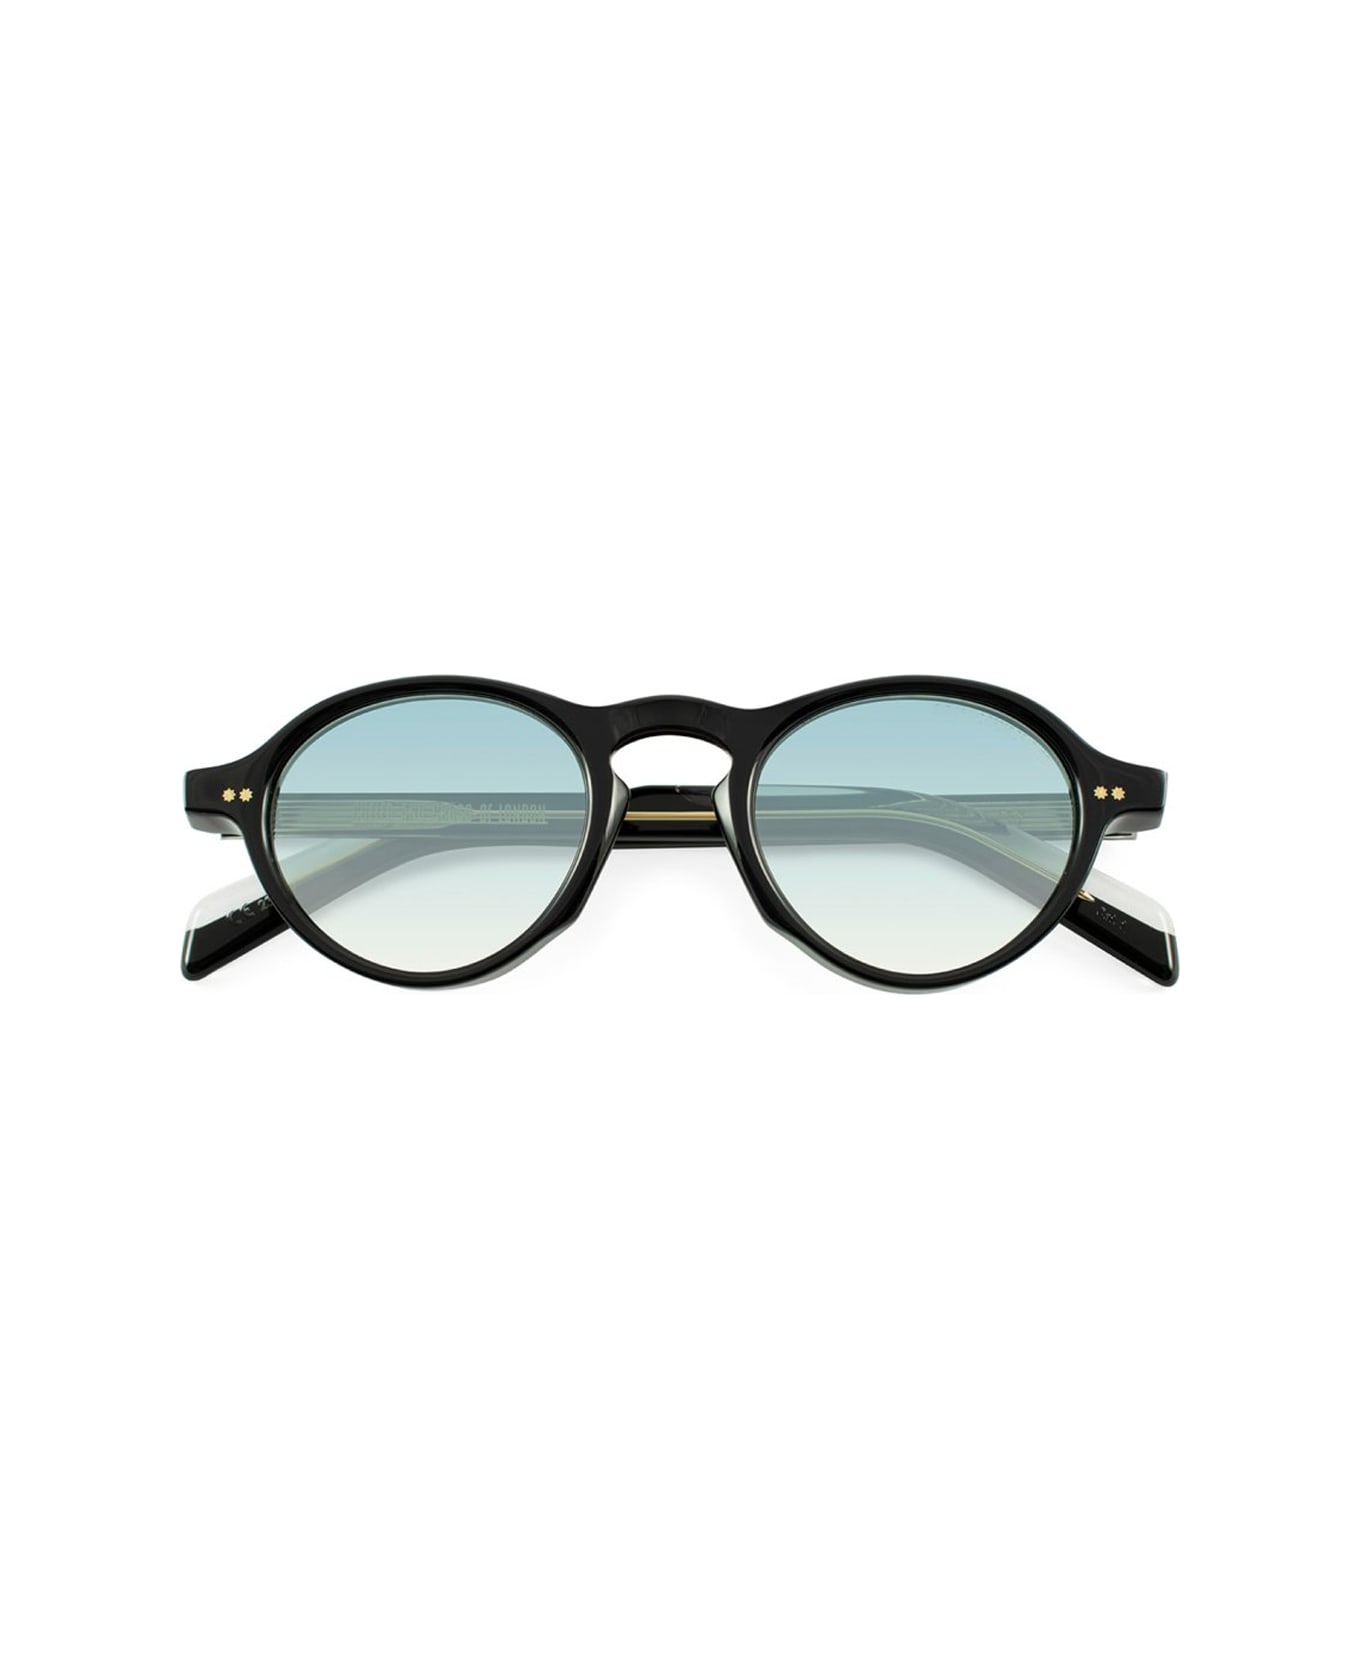 Cutler and Gross Gr08 01 Black Sunglasses - Nero